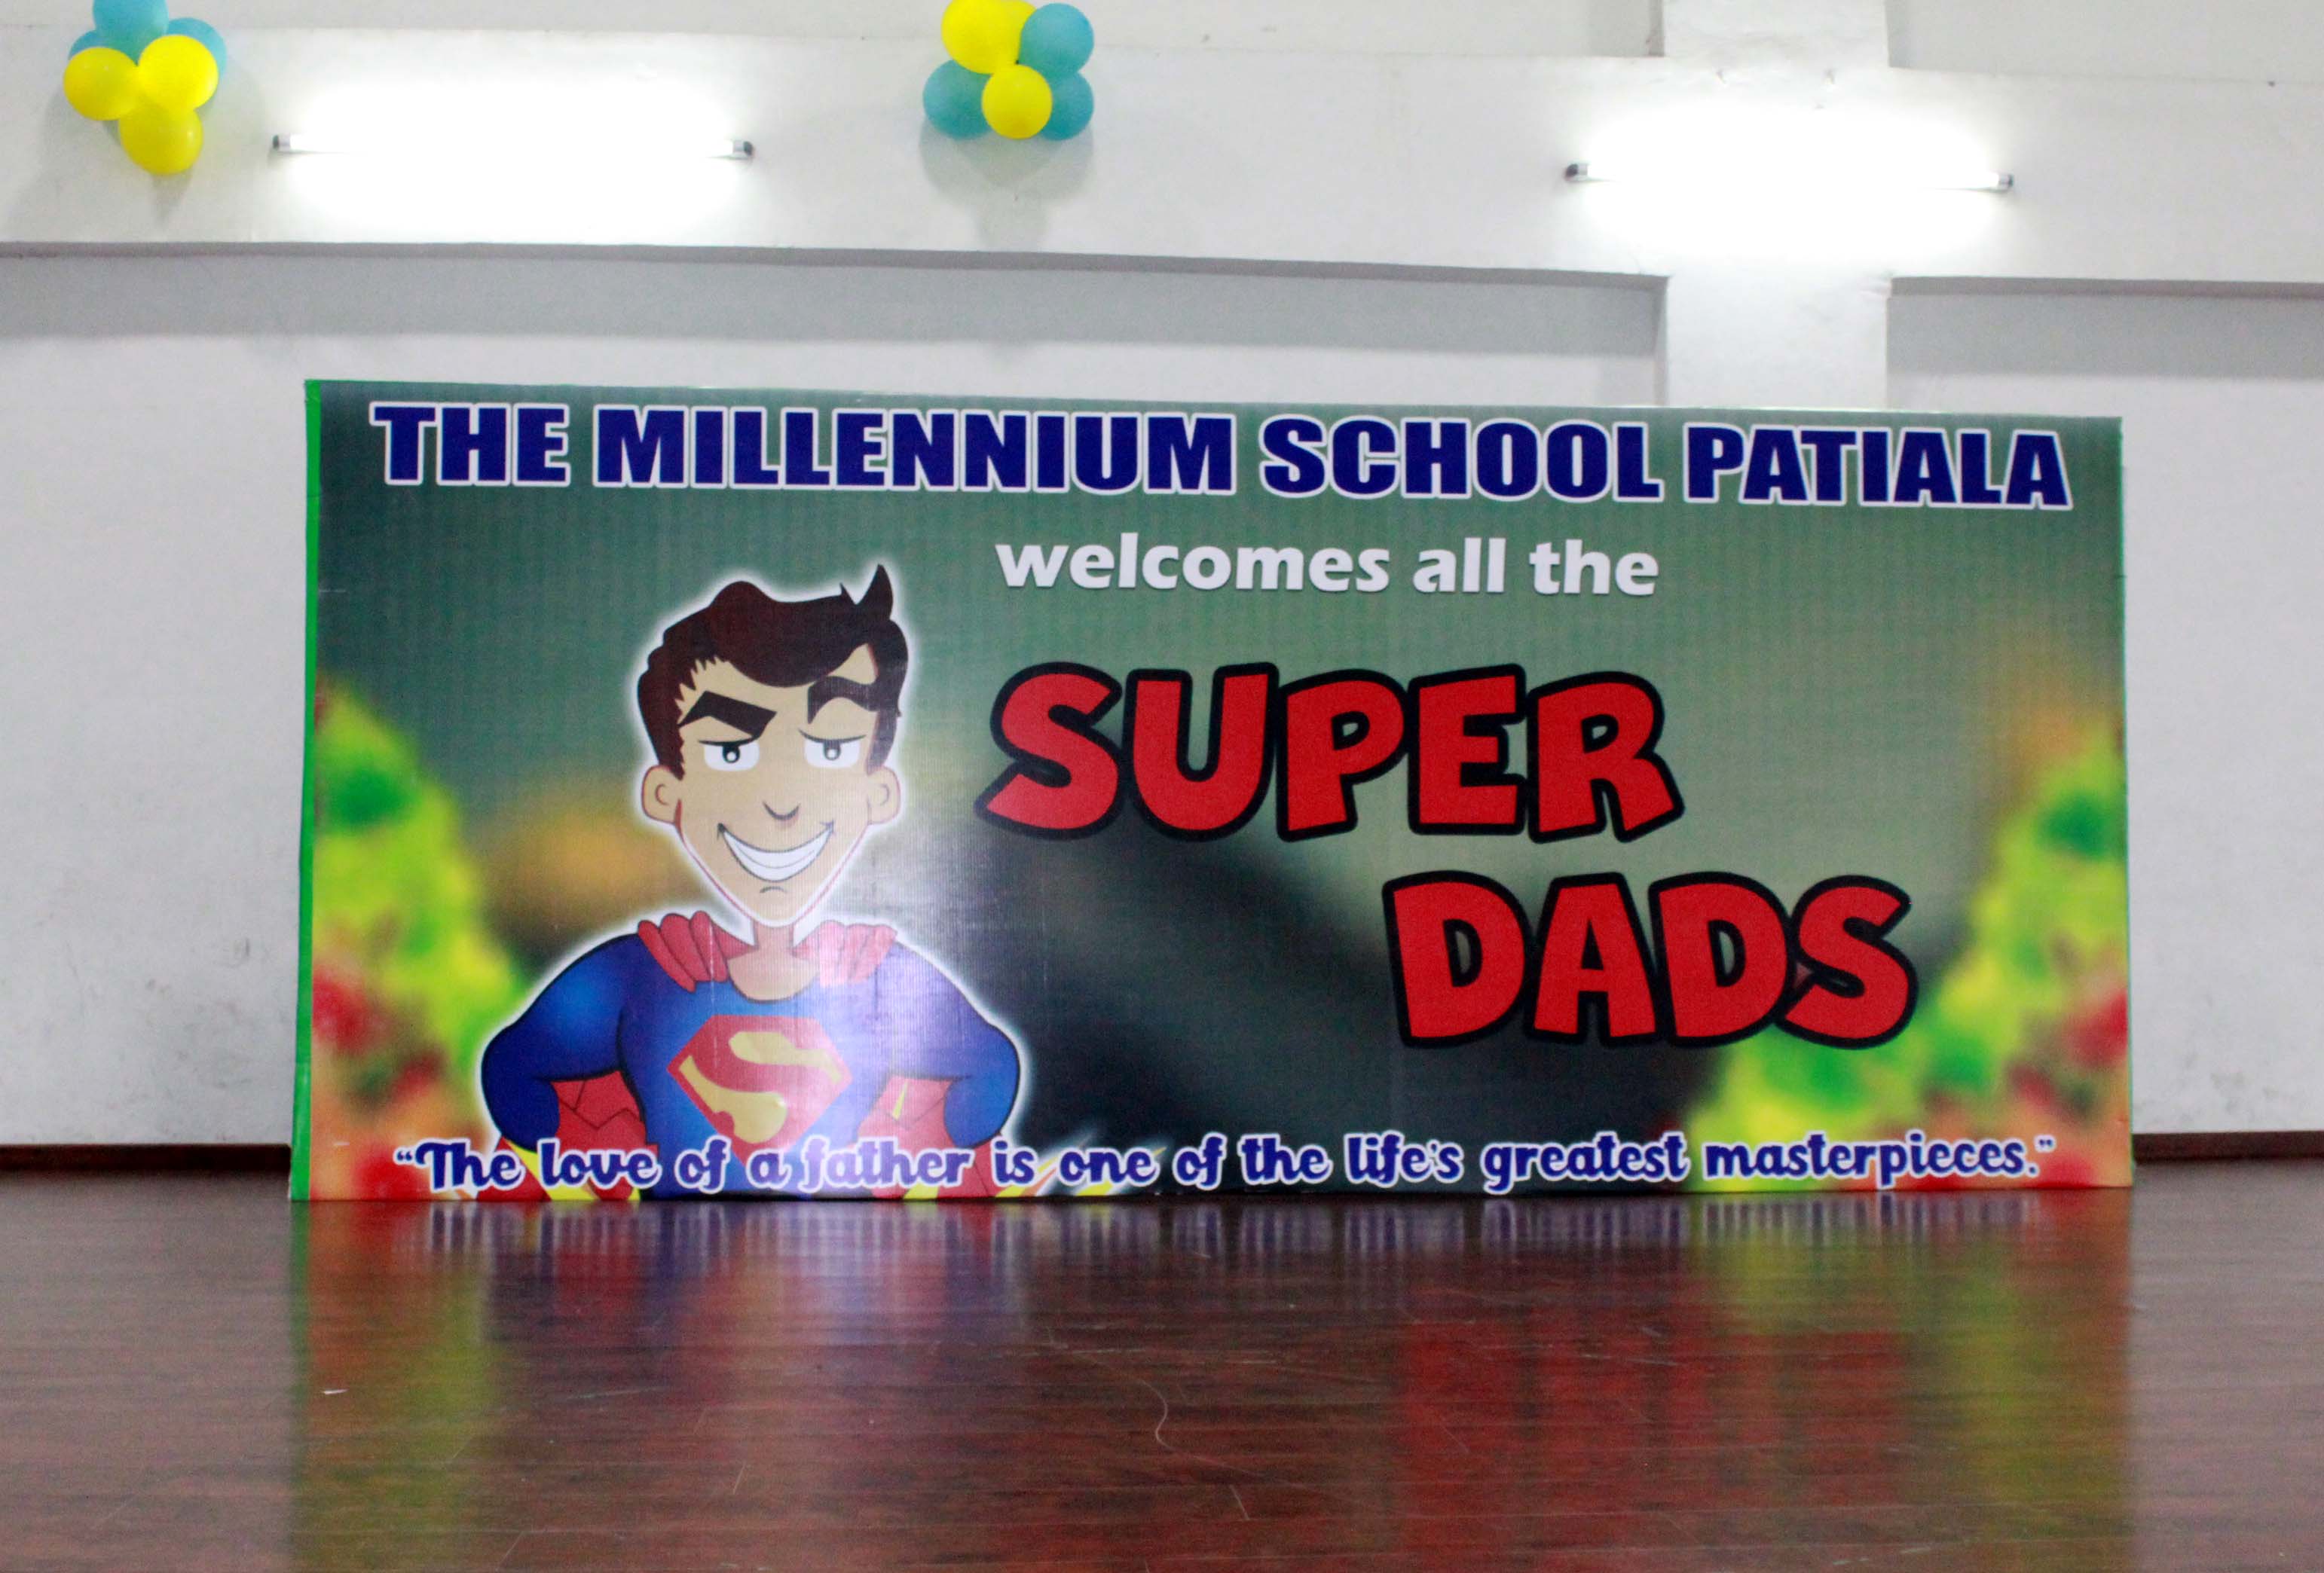 The Millennium School Patiala organized ‘Super Dads’ Event